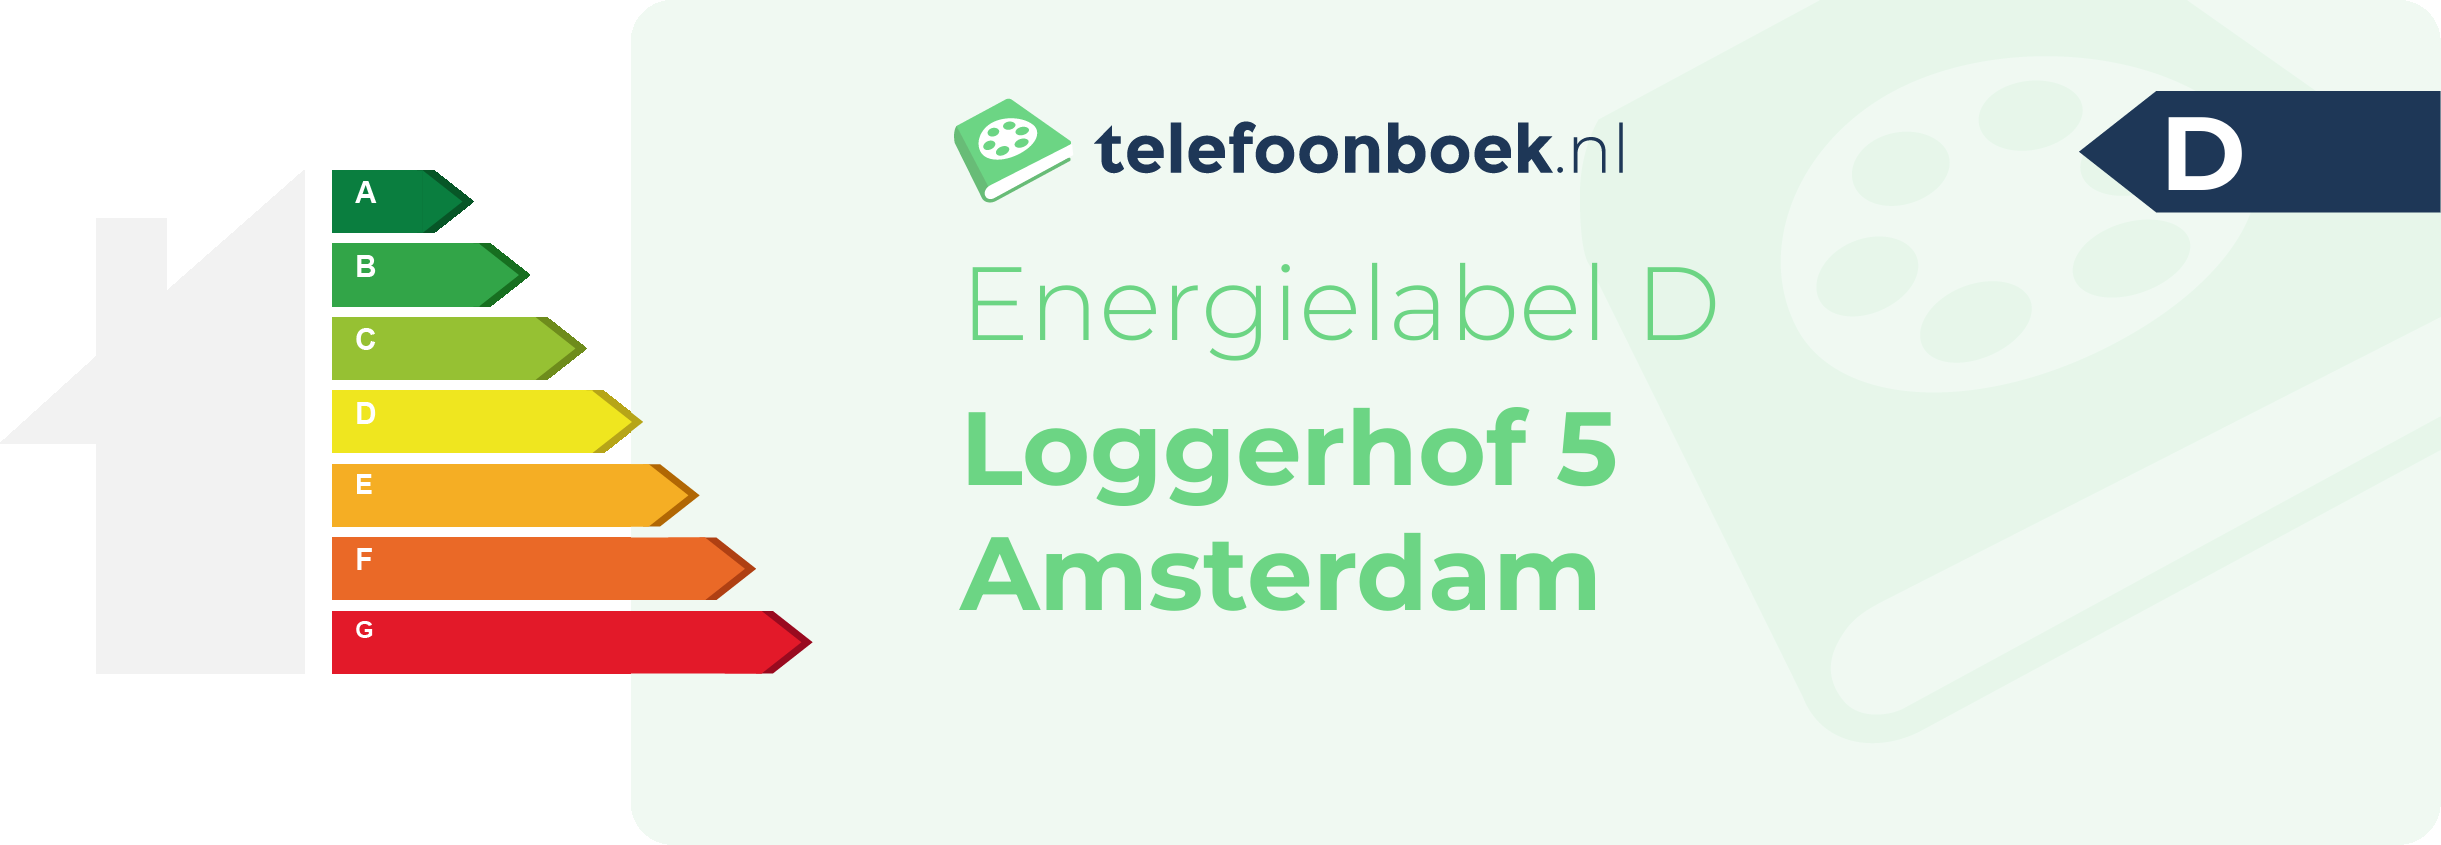 Energielabel Loggerhof 5 Amsterdam